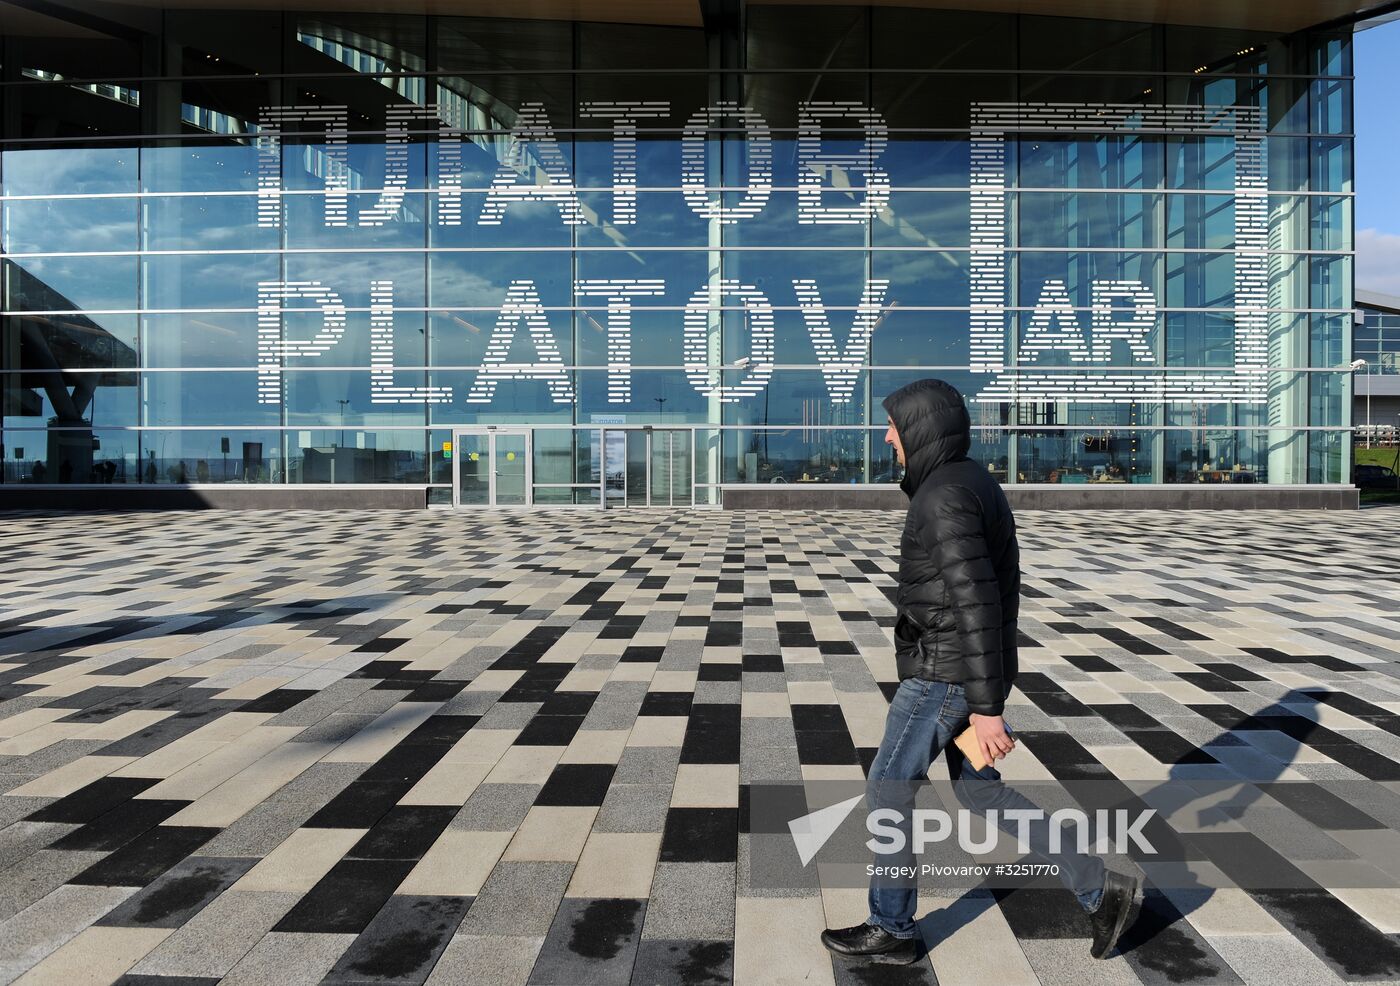 Platov Airport opens in Rostov-on-Don